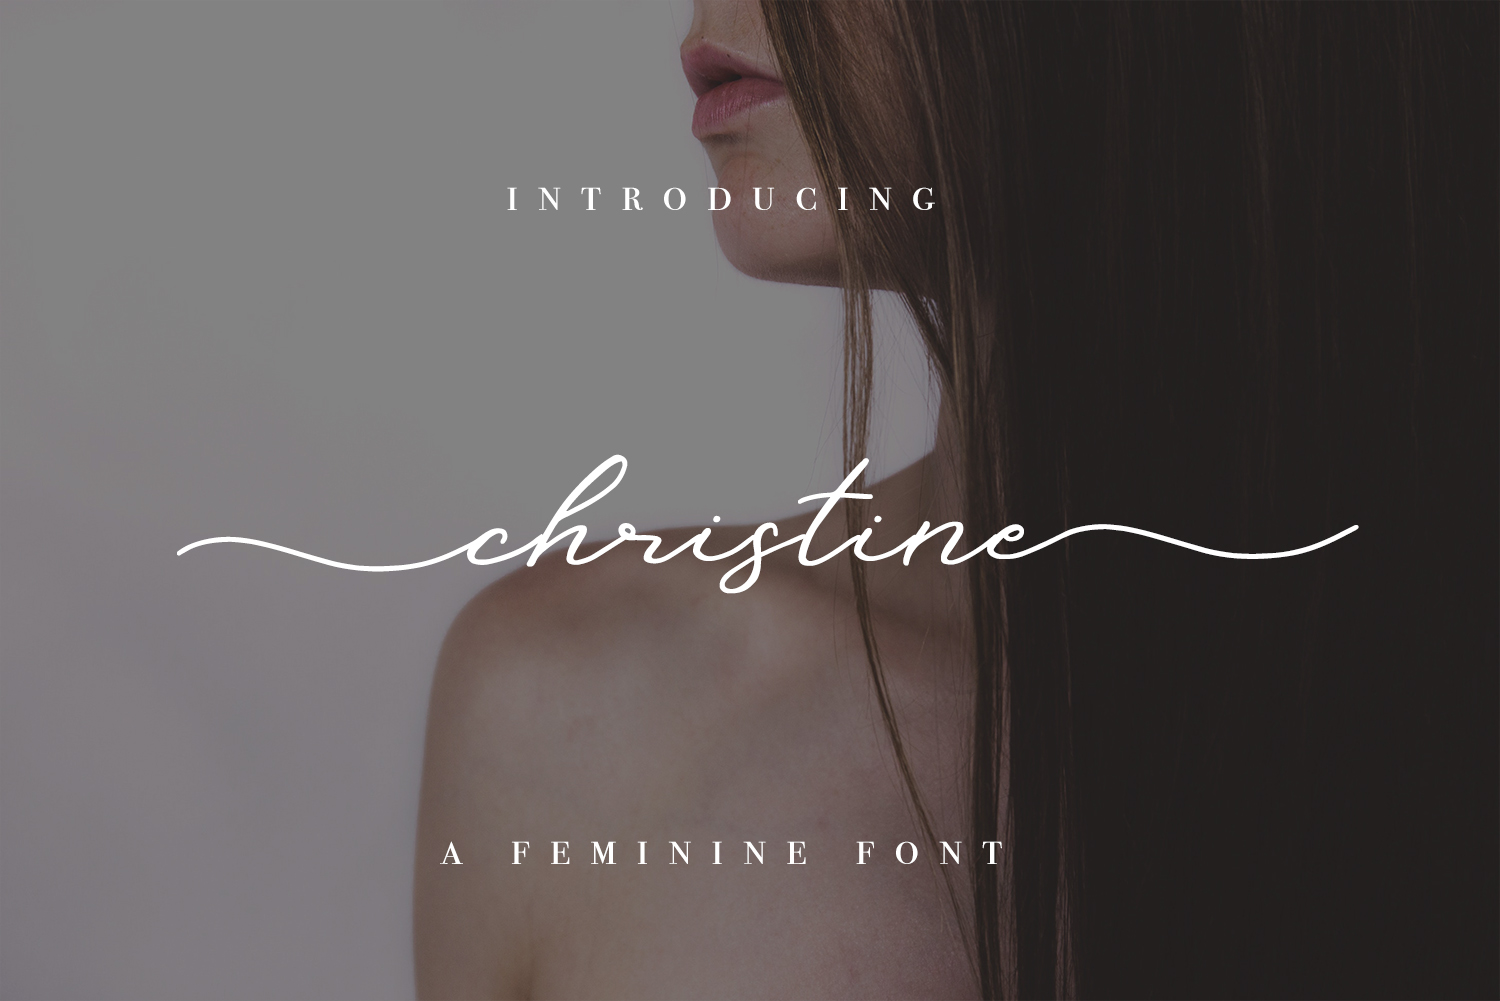 Christine Font Poster 1